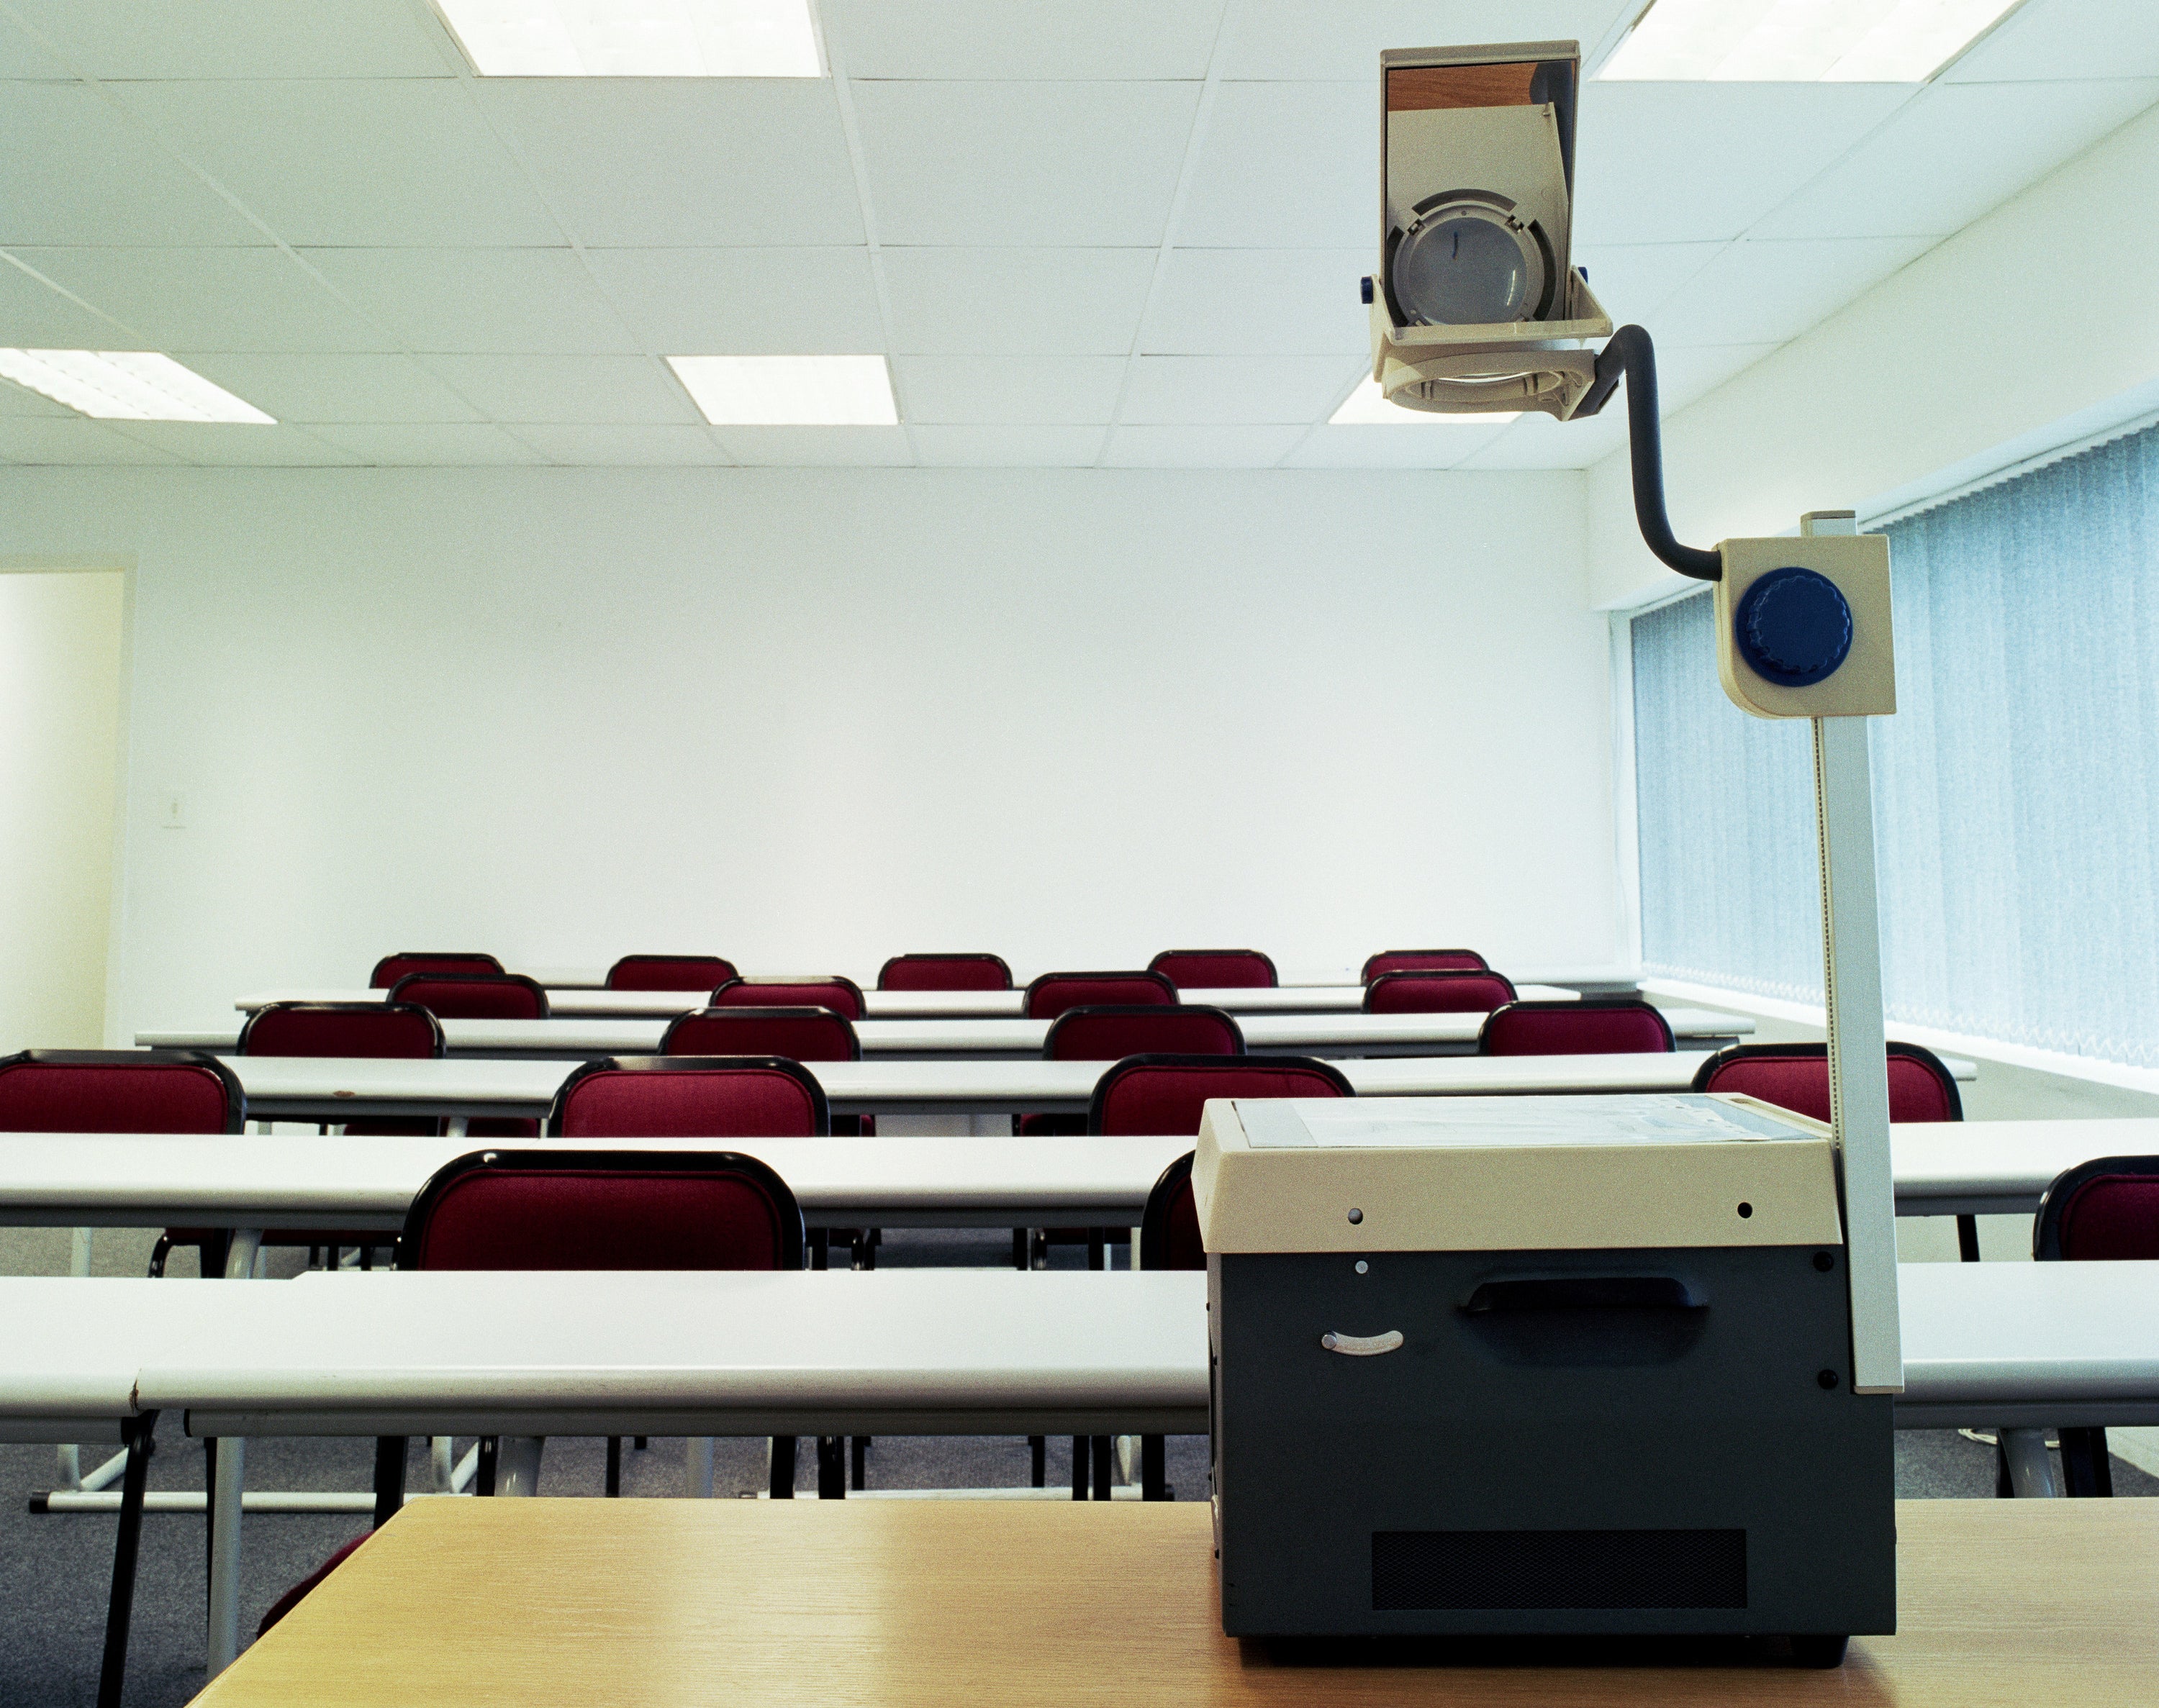 an overhead projector in a classroom